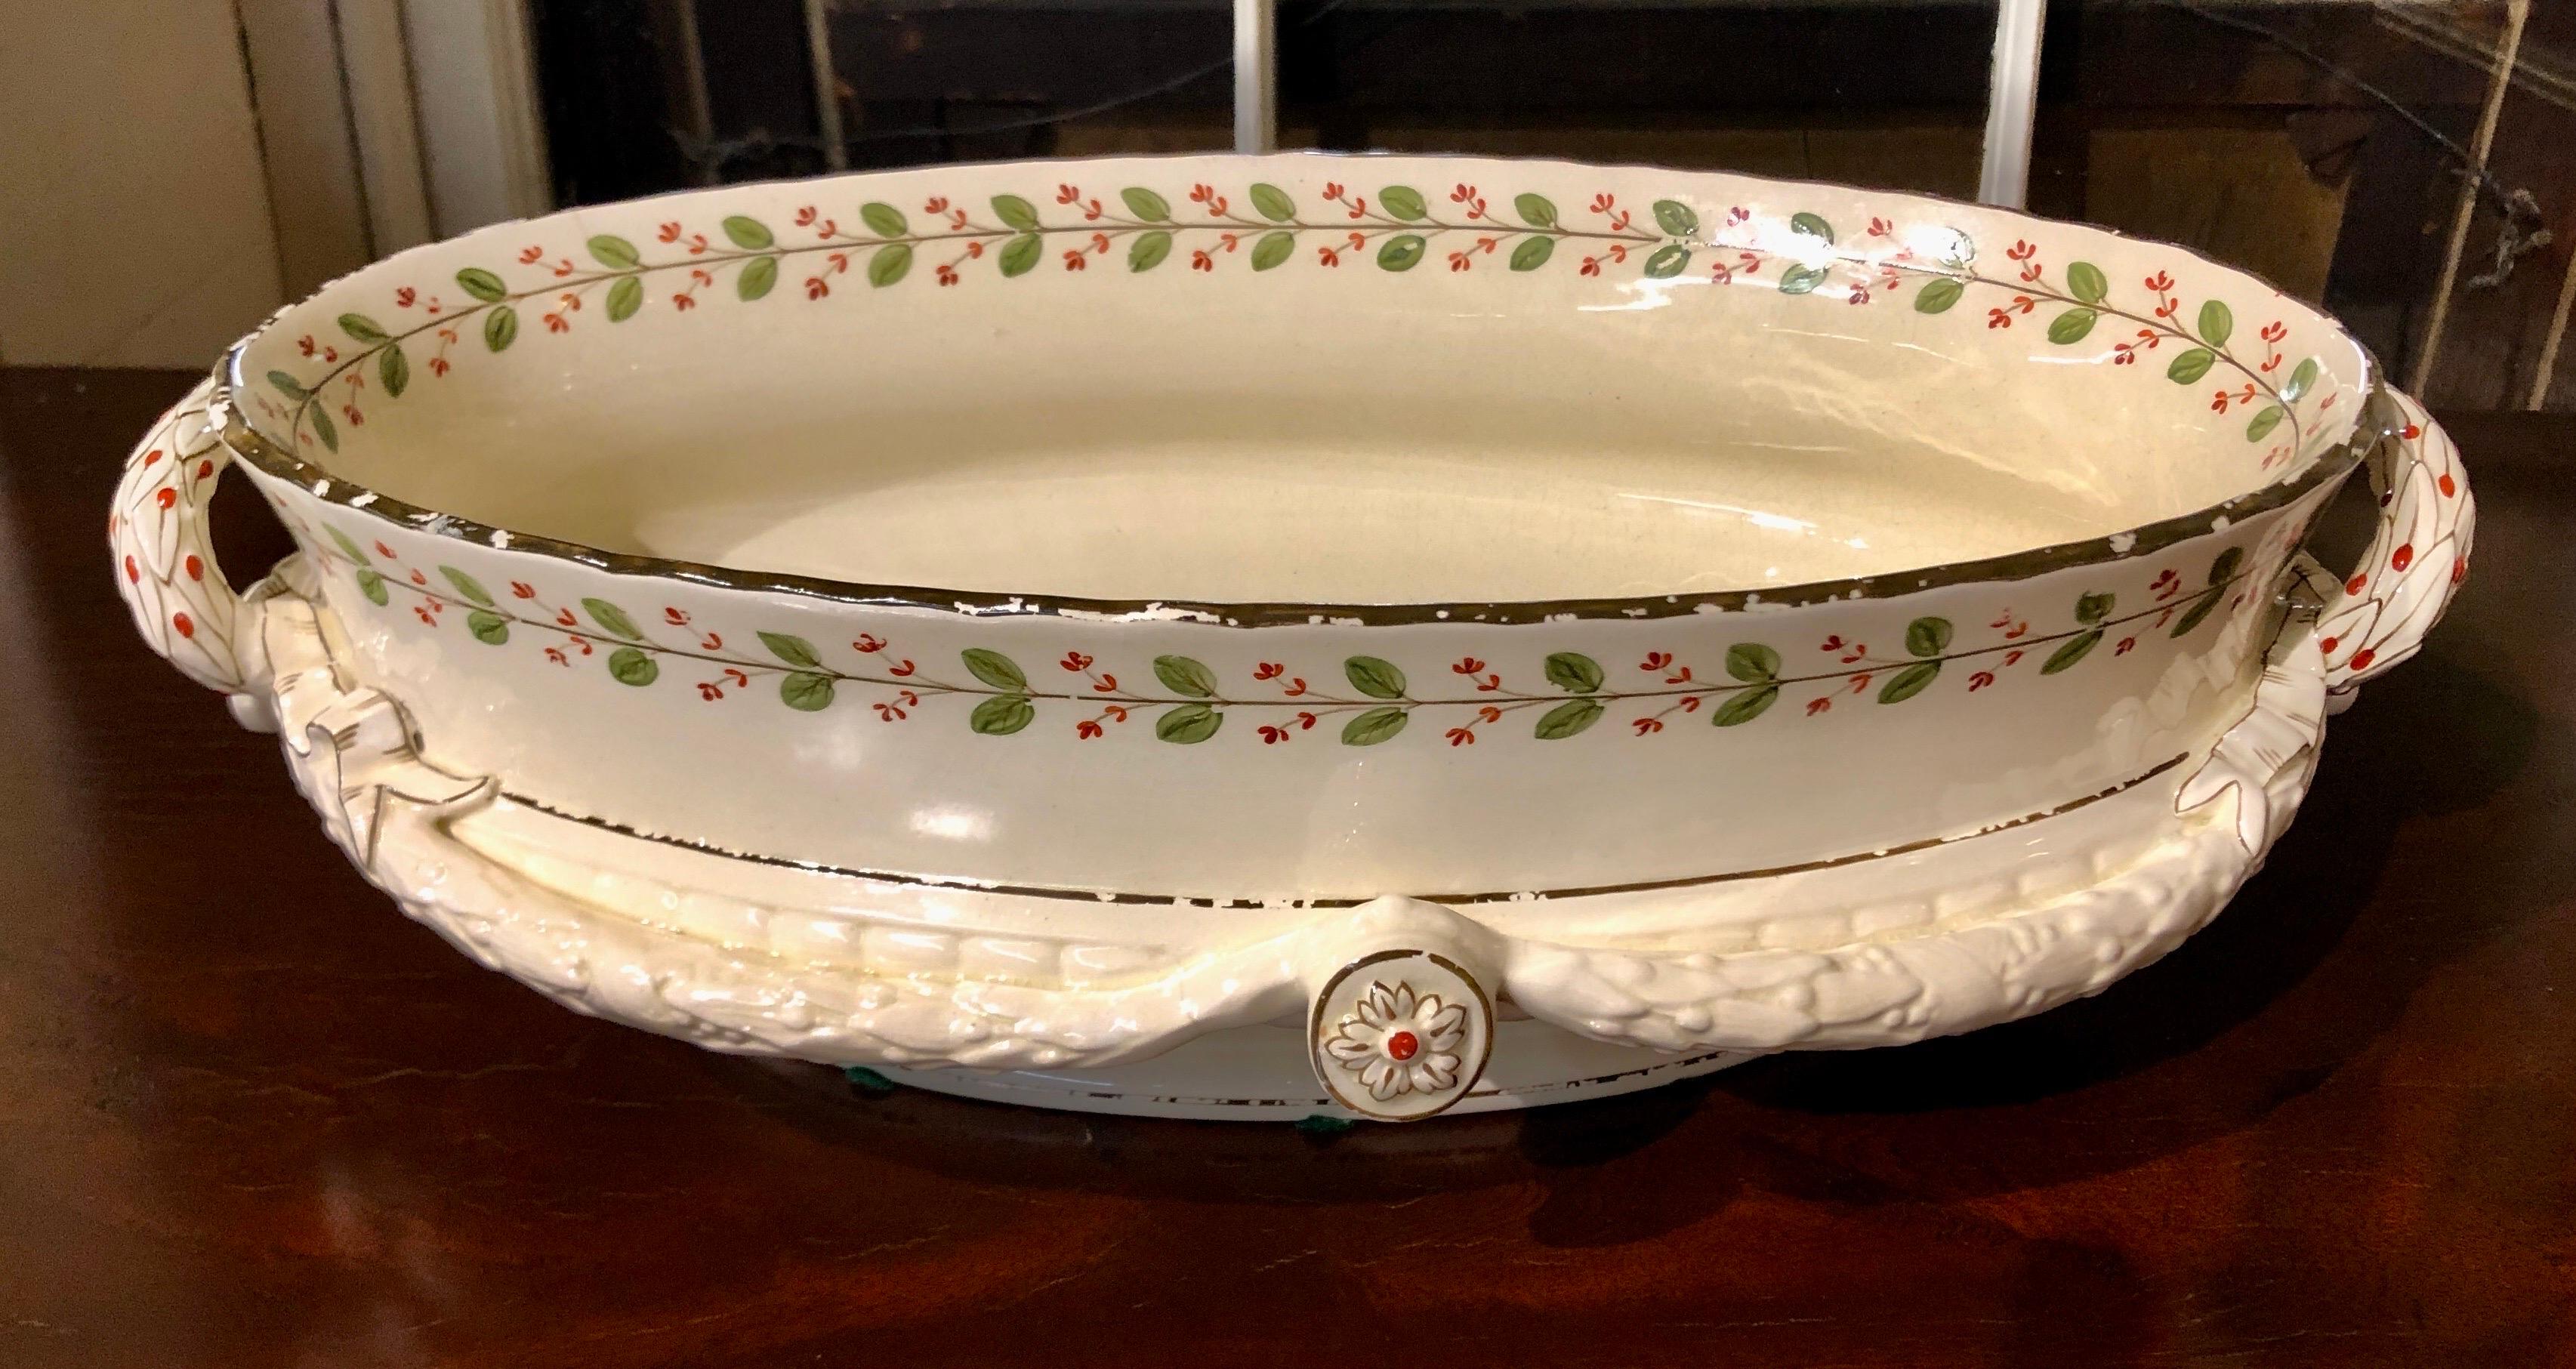 George III Grand bol « Creamware » anglais ancien et rare de Wedgwood Queensware du début du 19e siècle en vente